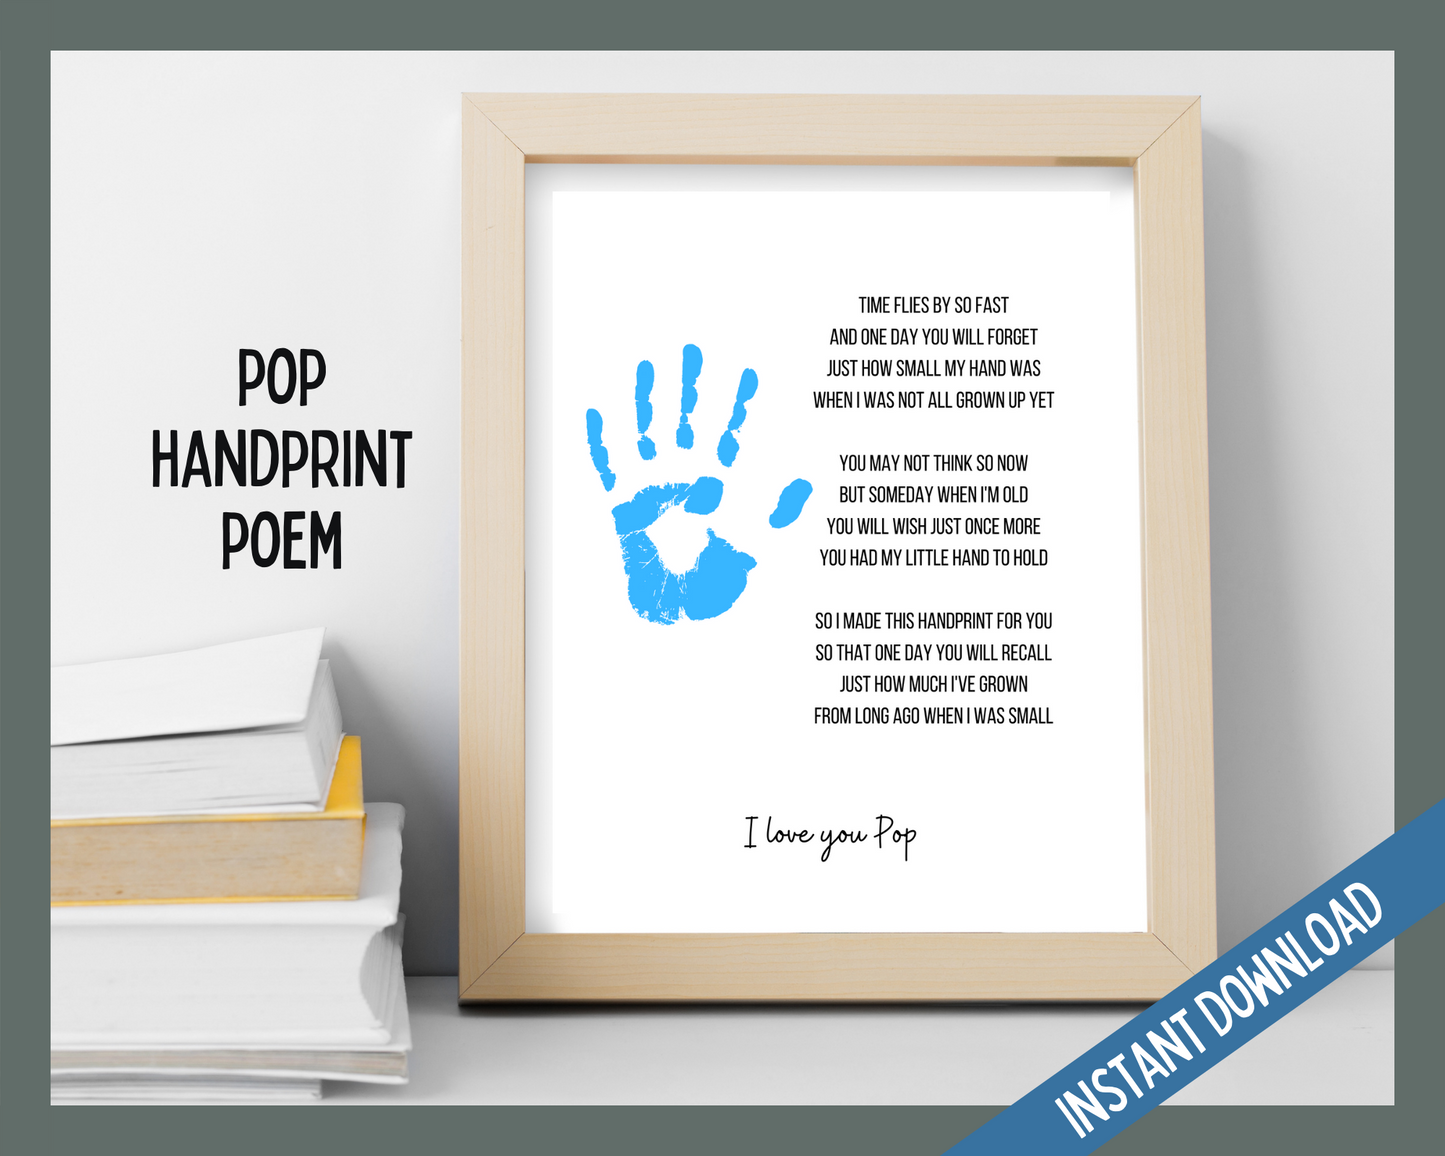 Pop Handprint Poem